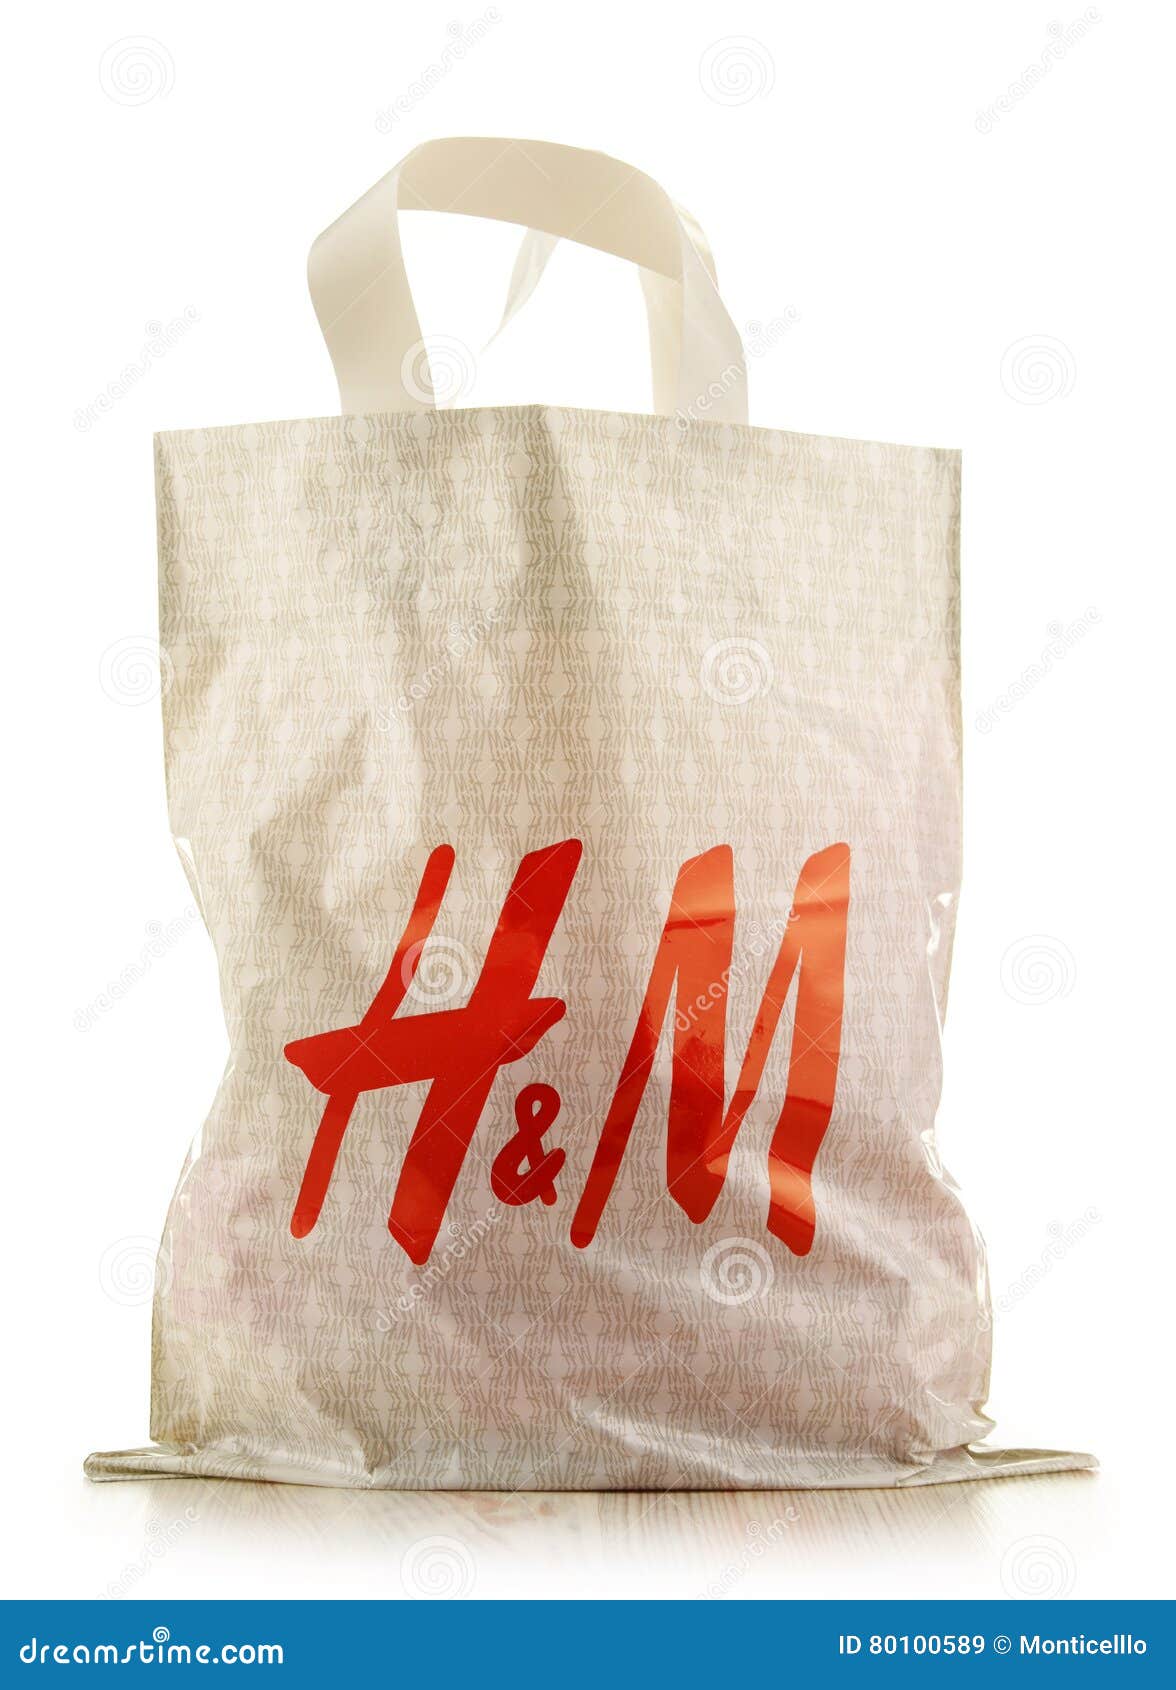 Original H&M plastic shopping bags – Stock Editorial Photo © monticello  #132328310